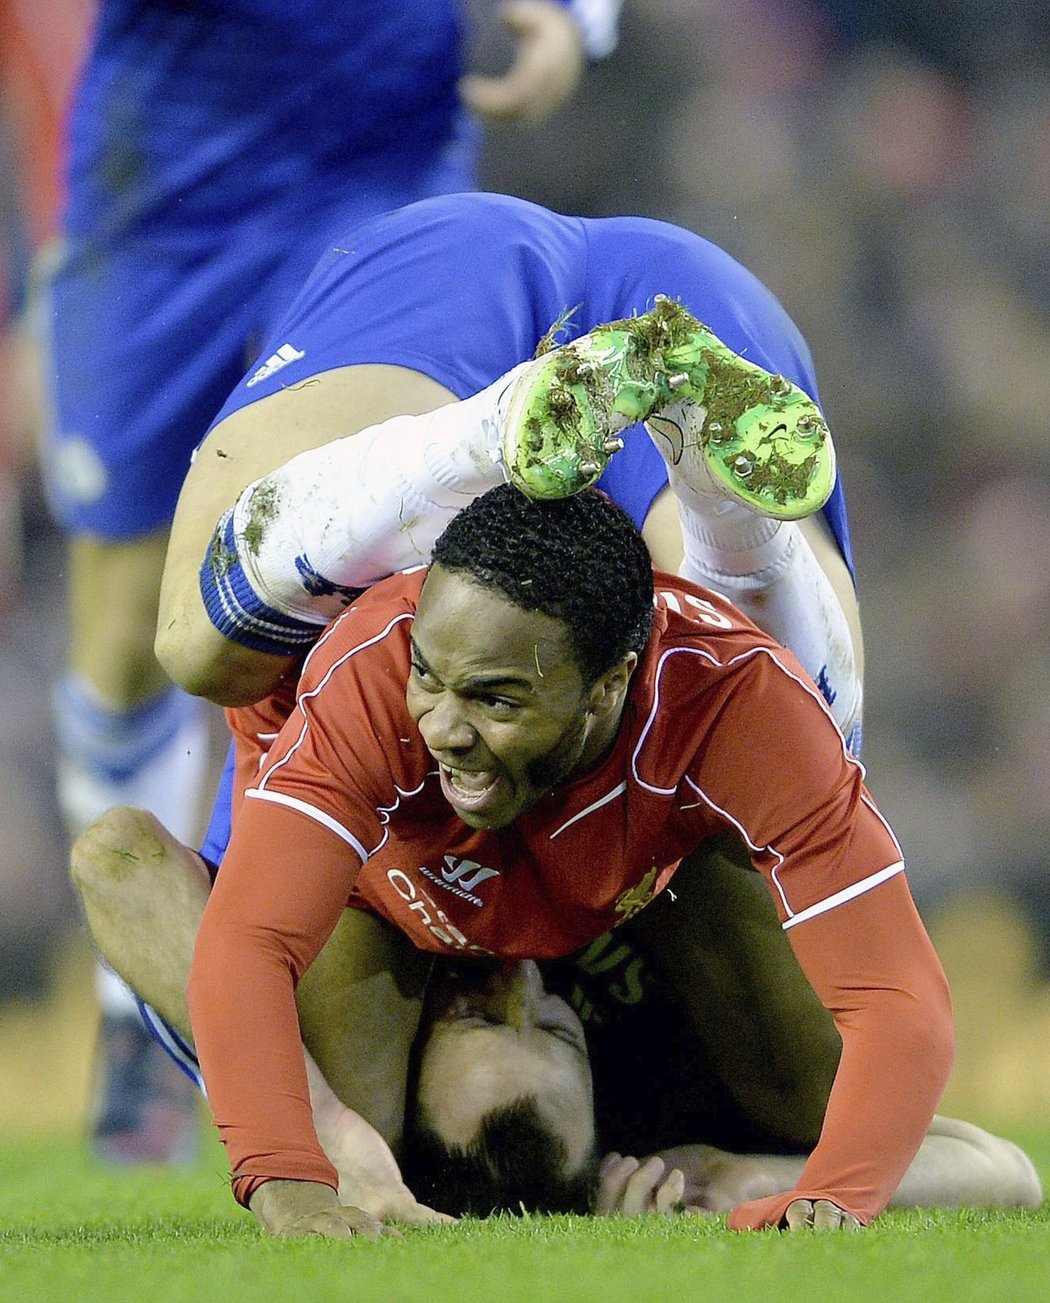 John Terry a Raheem Sterling v choulostivé situaci v duelu Liverpoolu s Chelsea